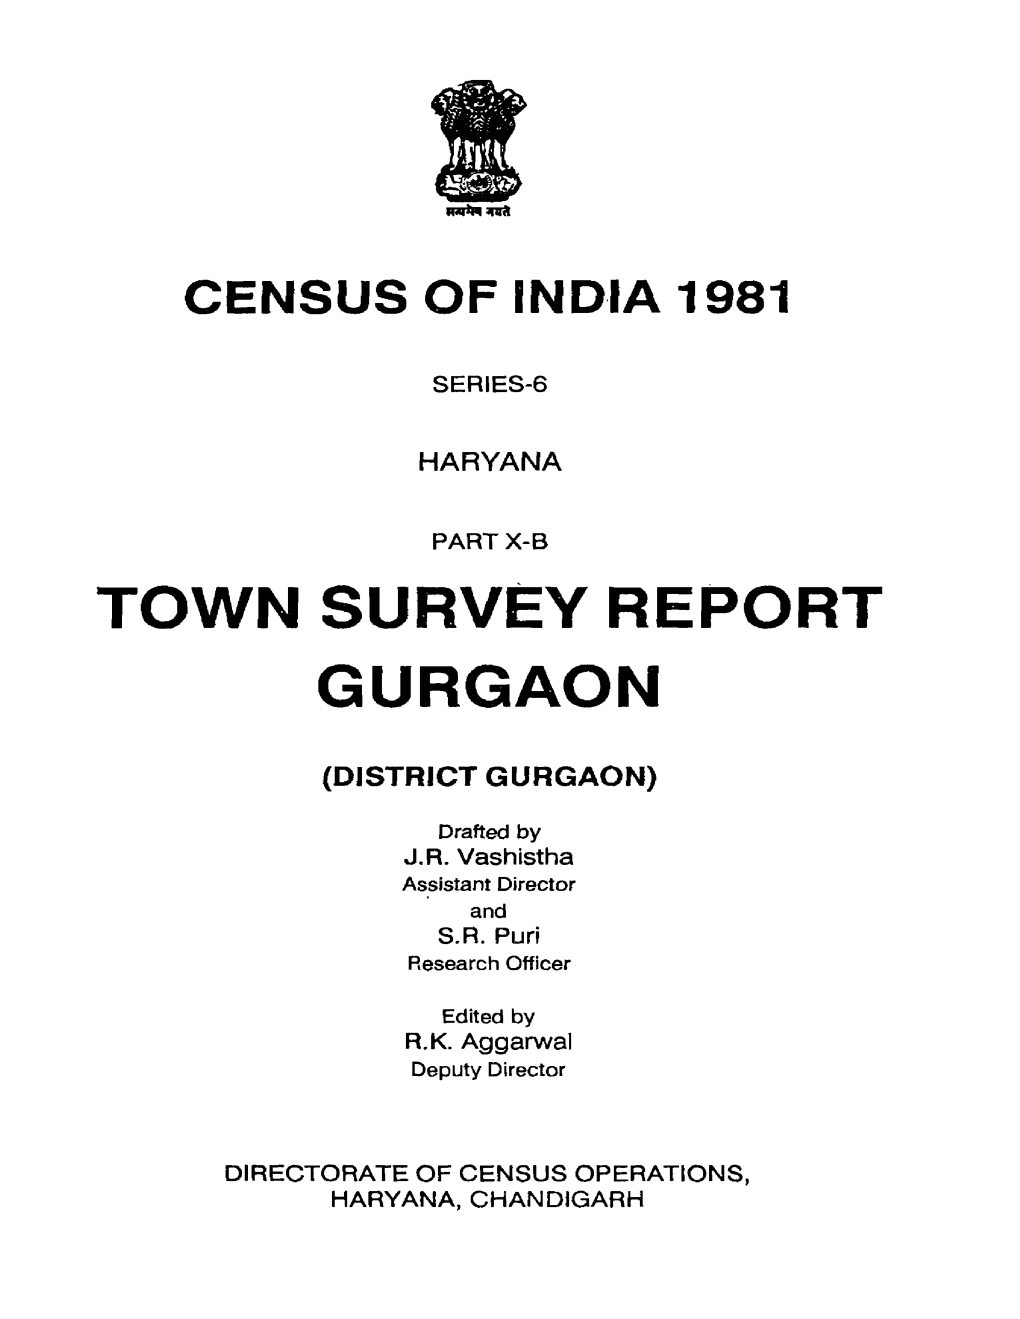 Town Survey Report Gurgaon, Part-X-B, Series-6, Haryana